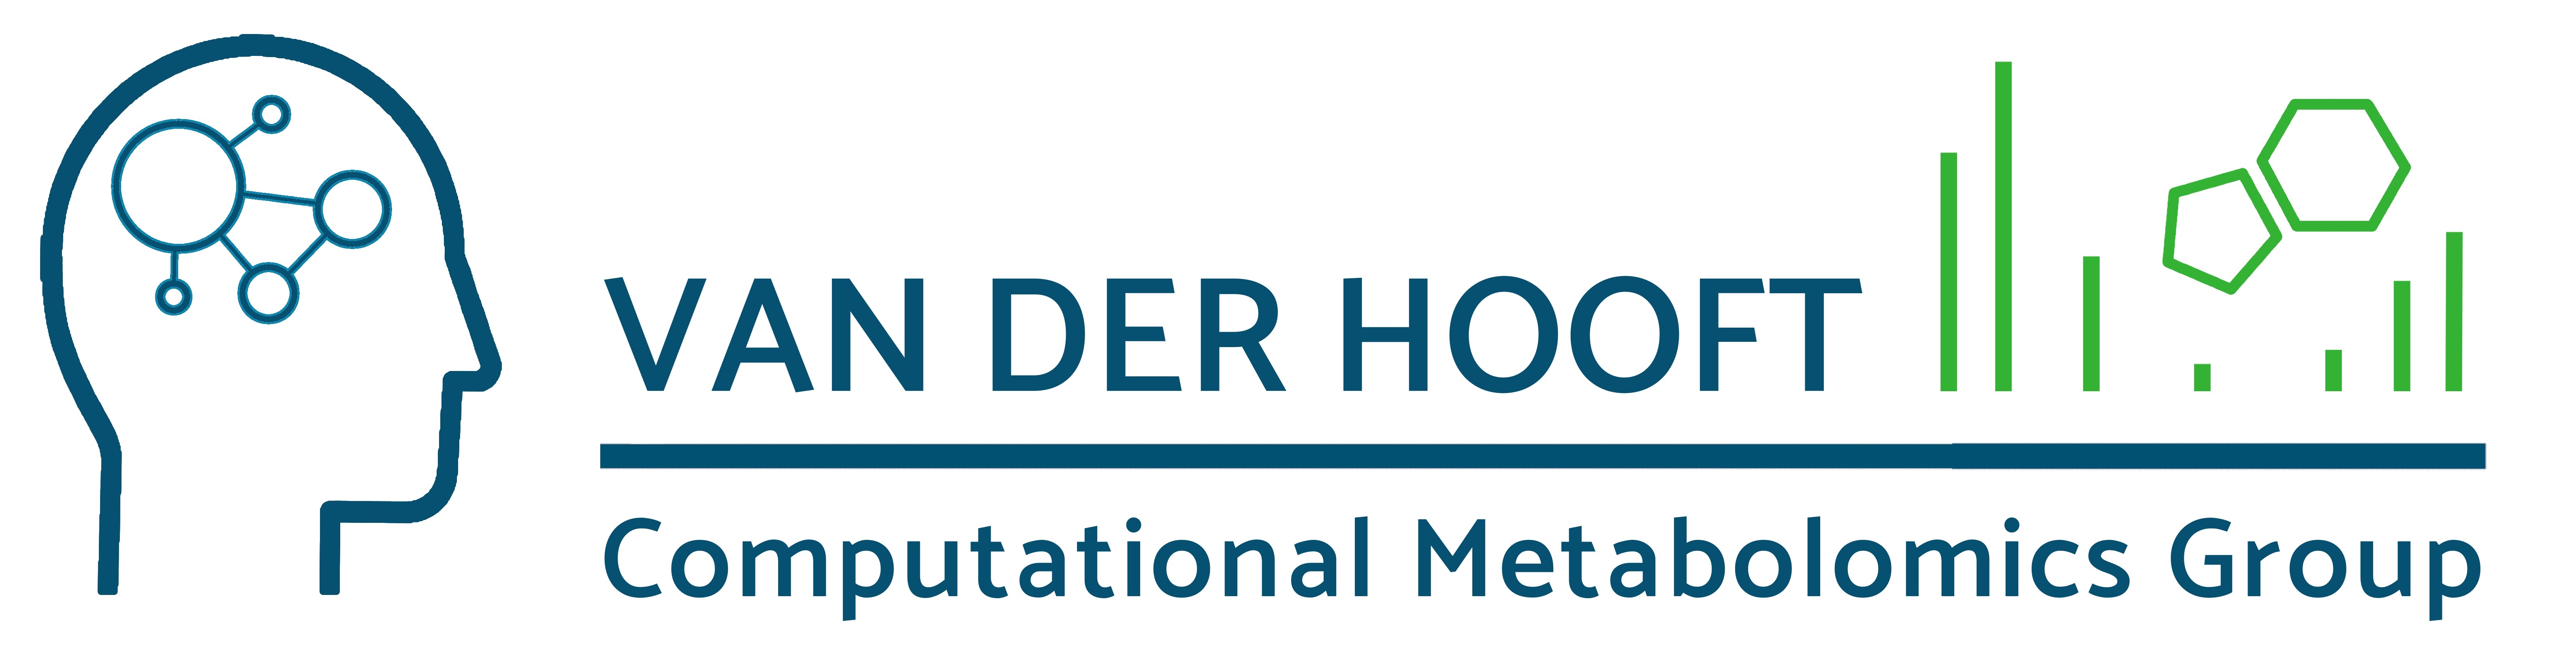 Van der Hooft Computational Metabolomics logo